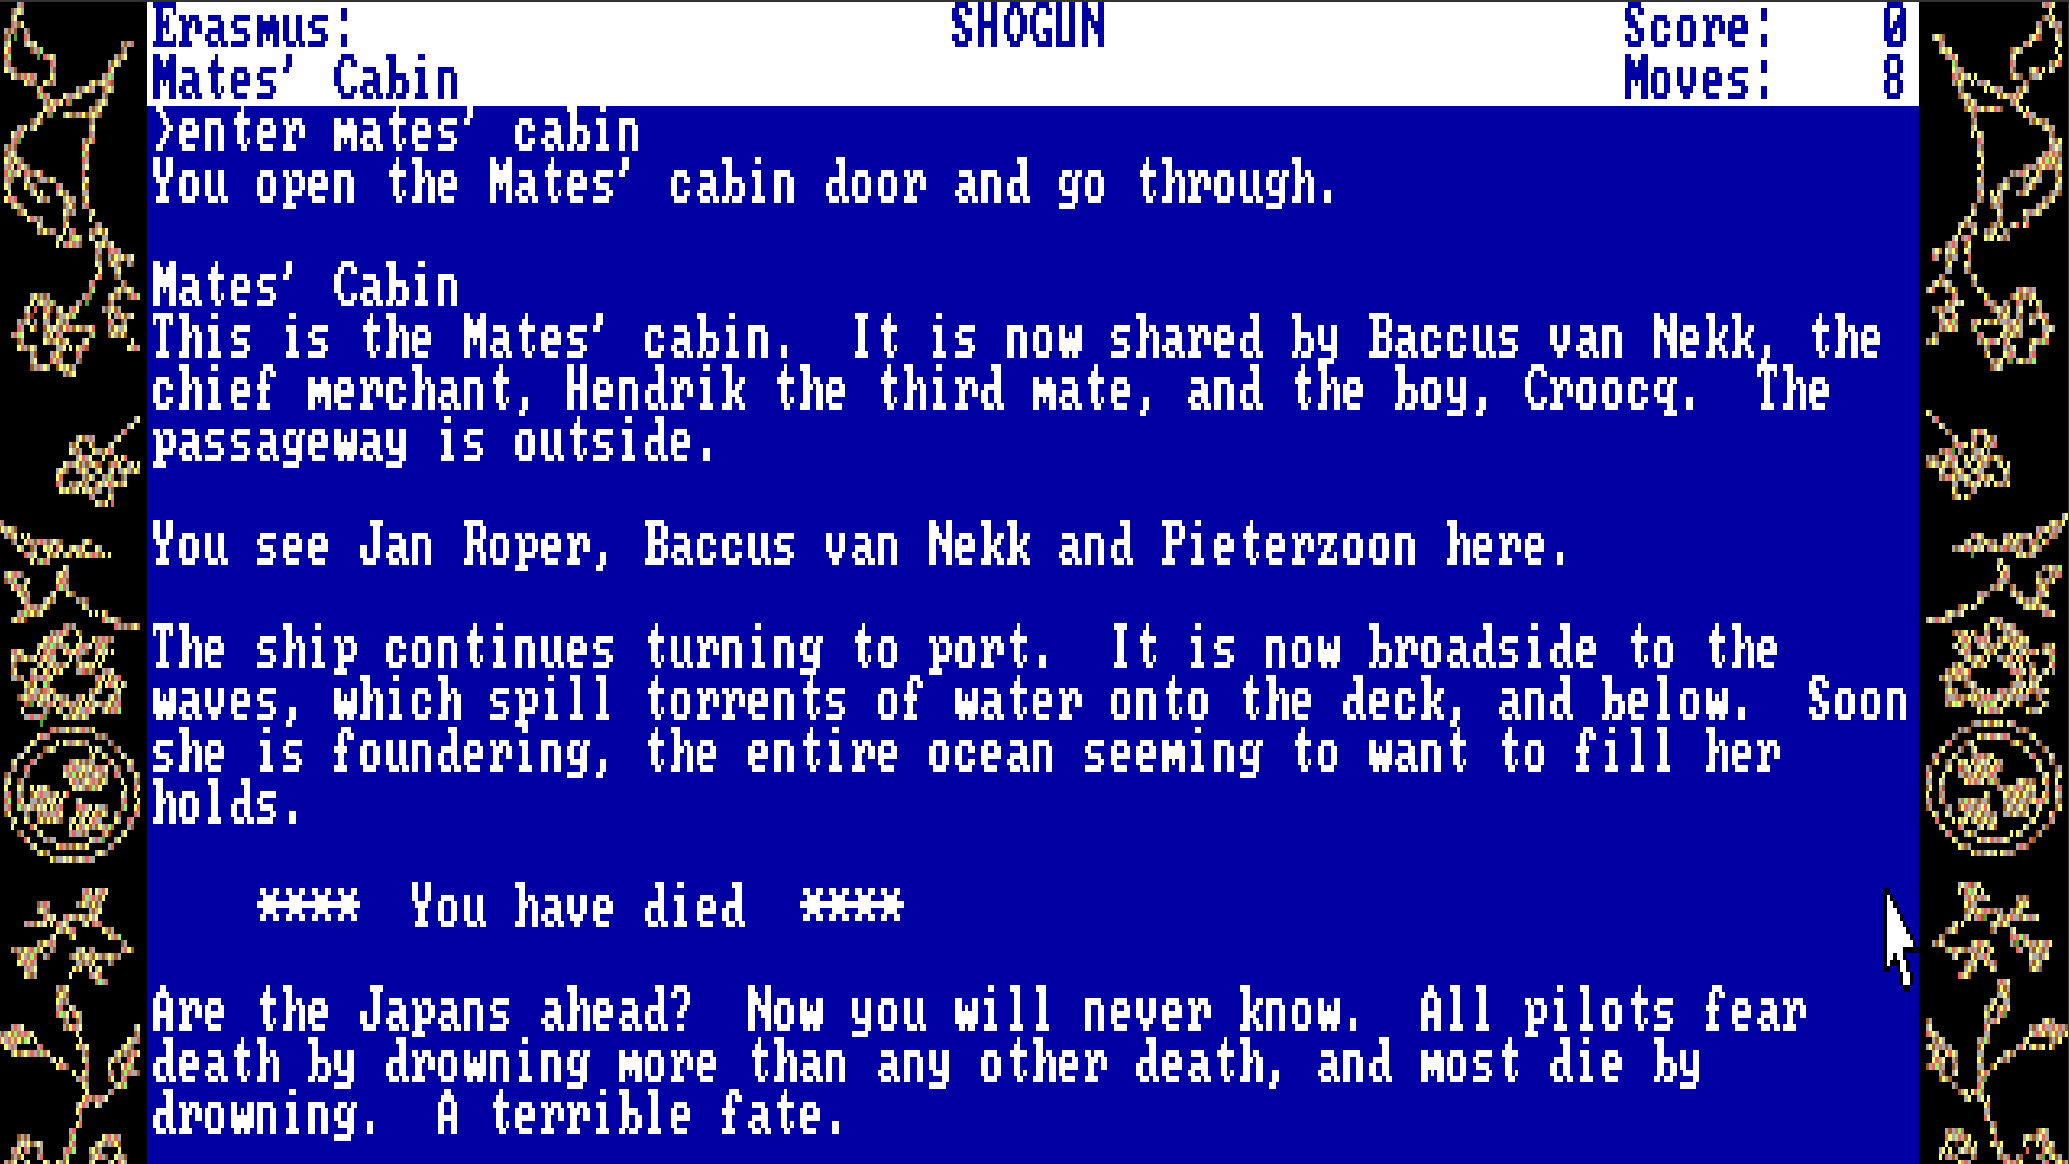 A death screen in Infocom's Shogun text adventure.